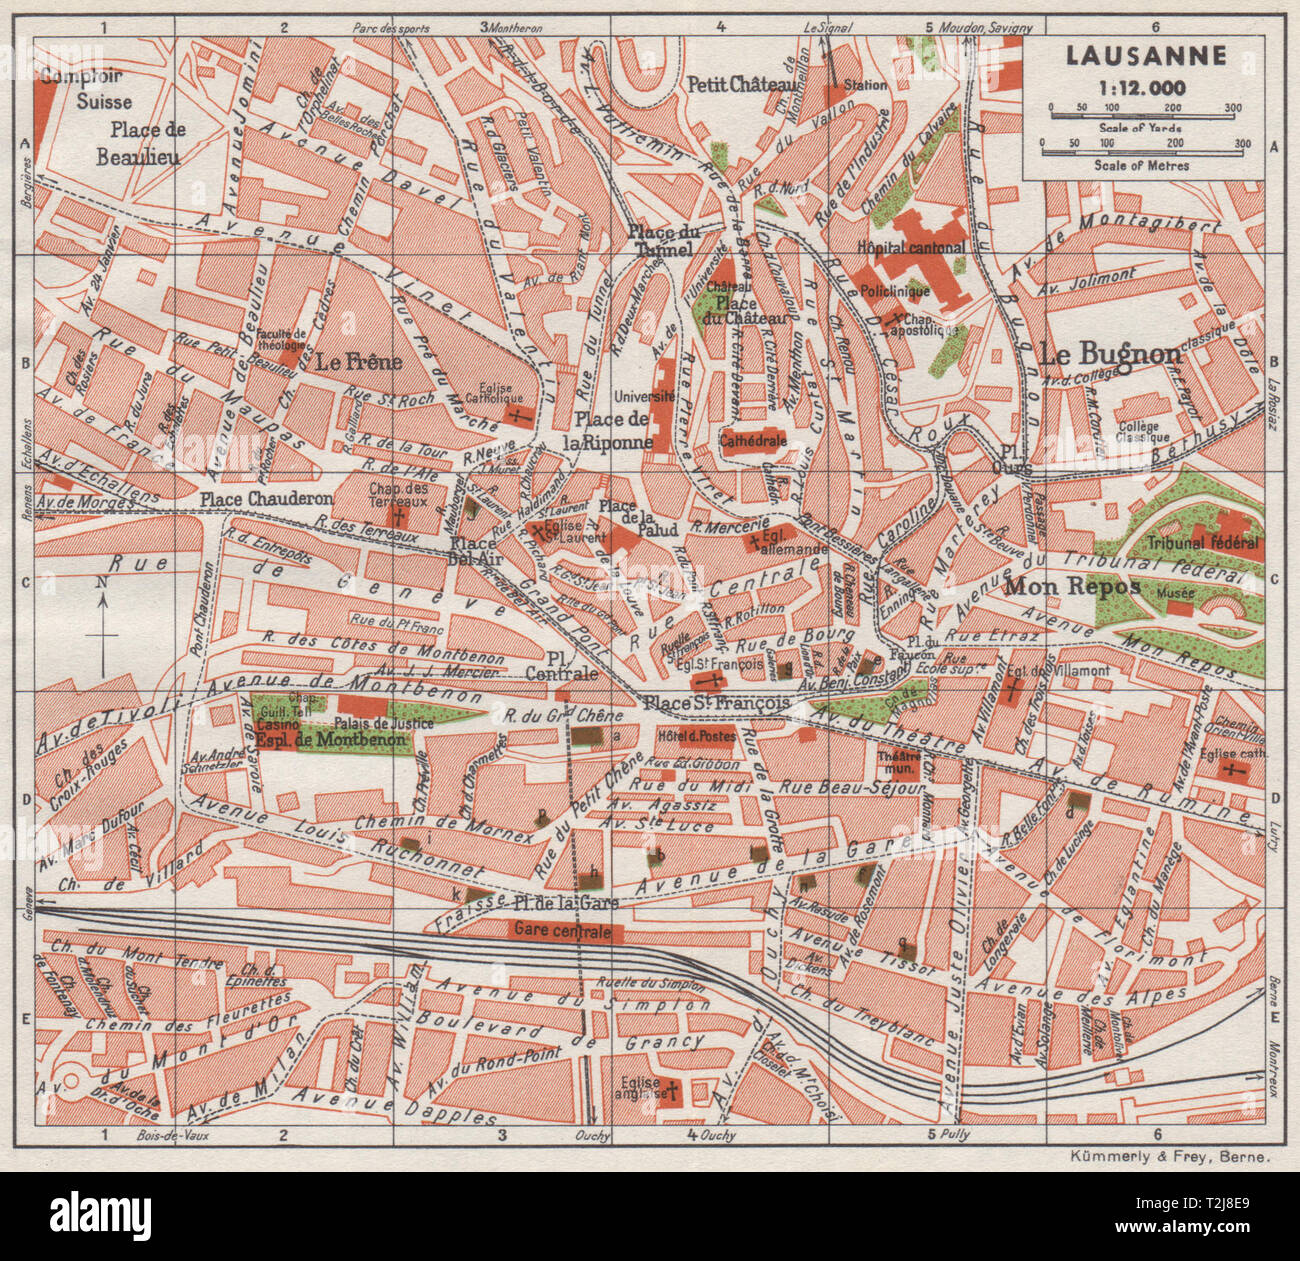 LAUSANNE. Vintage town city map plan. Switzerland 1948 old vintage chart  Stock Photo - Alamy